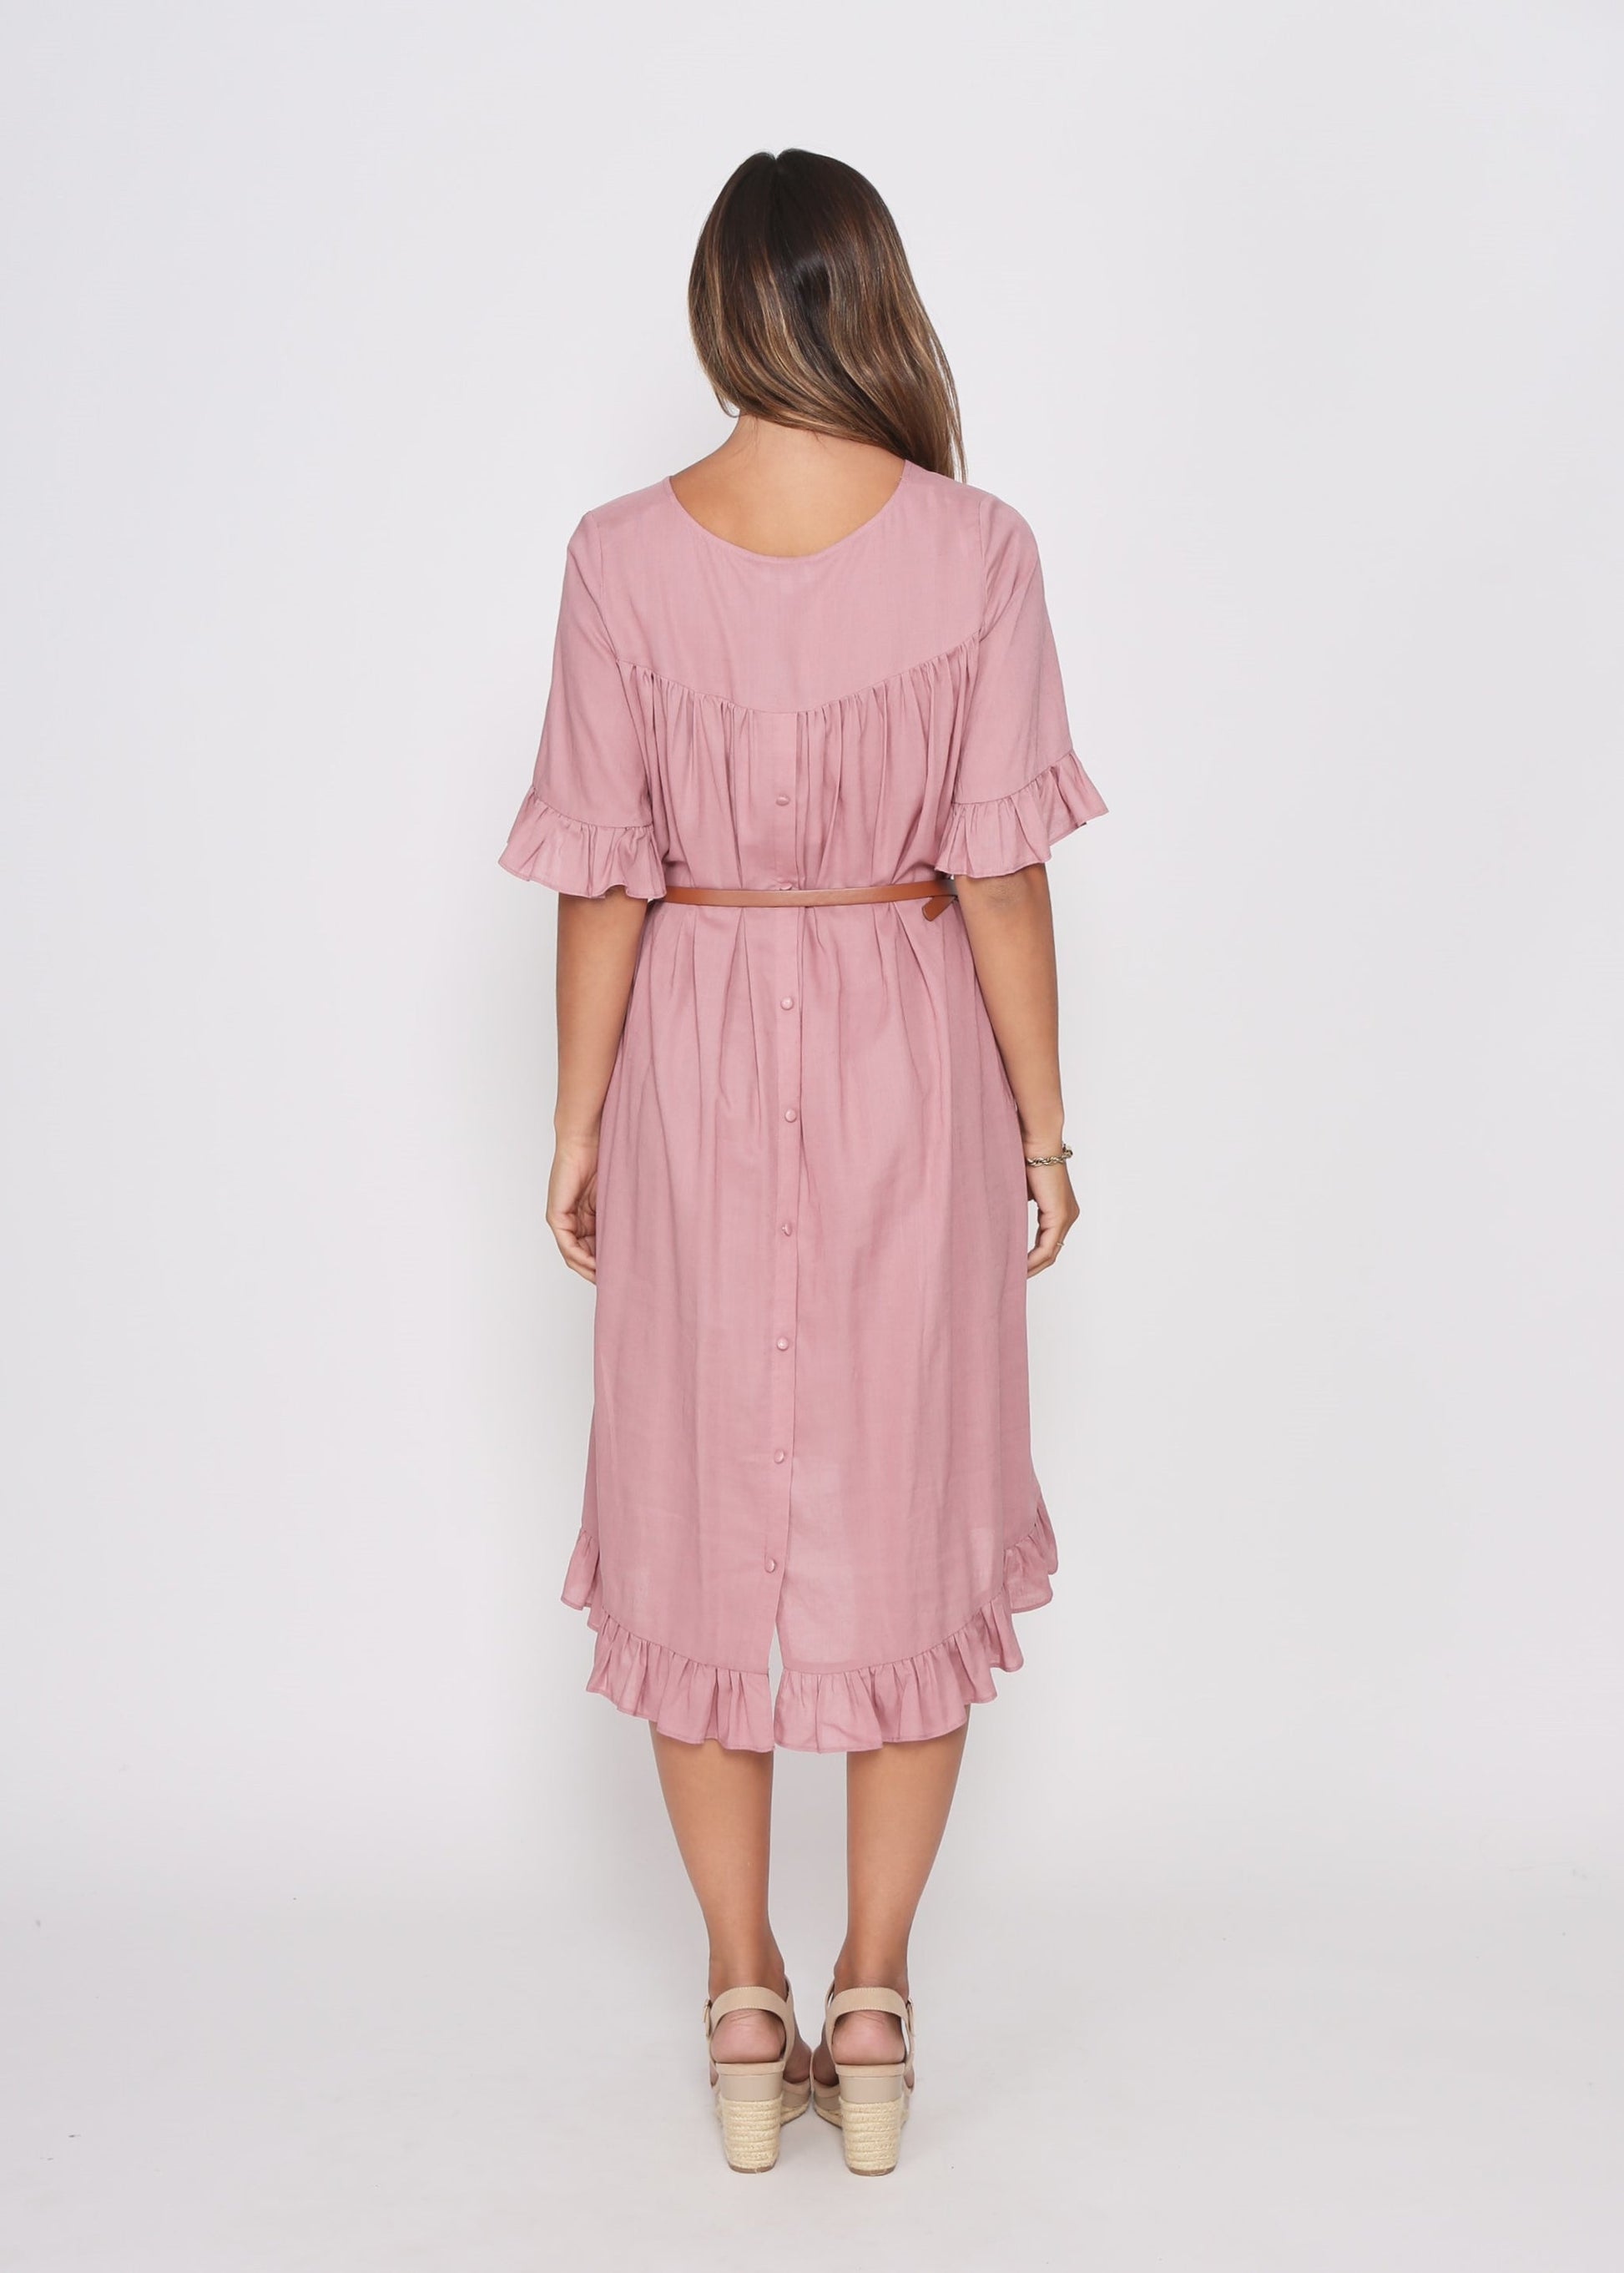 Dusky Pink Dress with pretty sleeve detail and hem line. - sammi